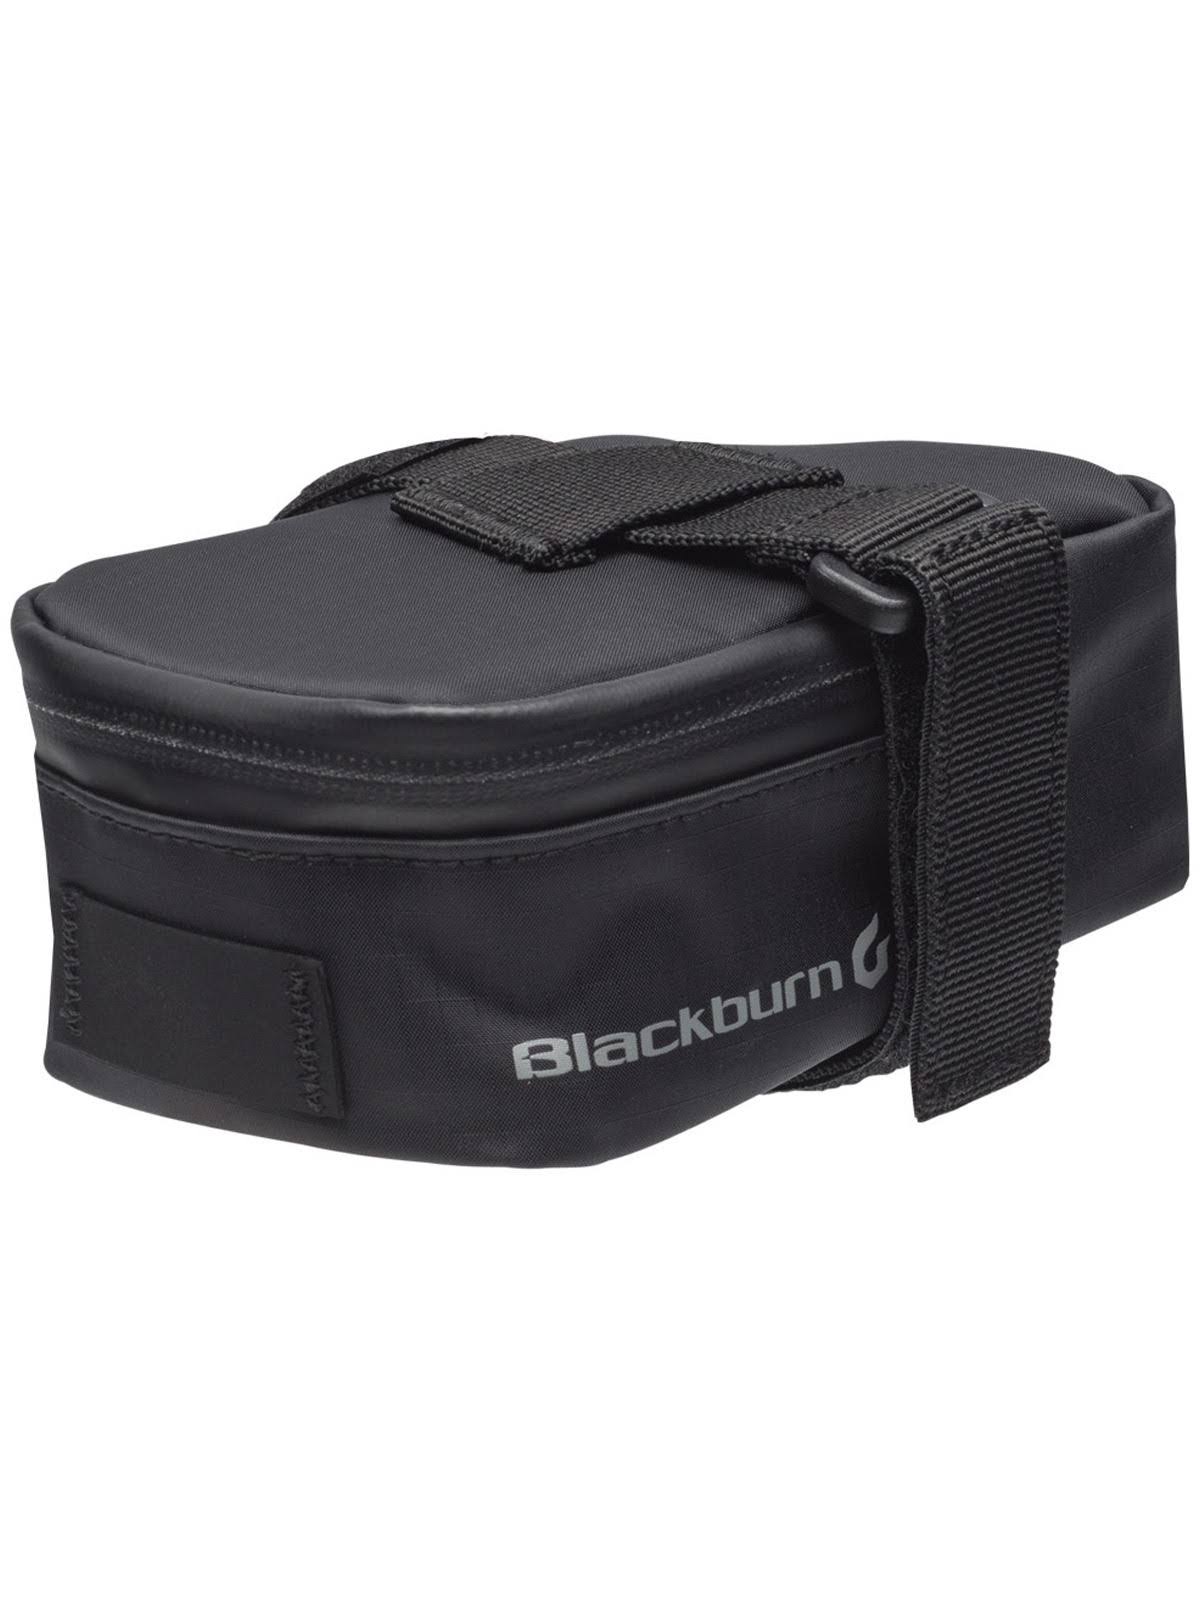 Blackburn Grid MTB Reflective Seat Bag - Black